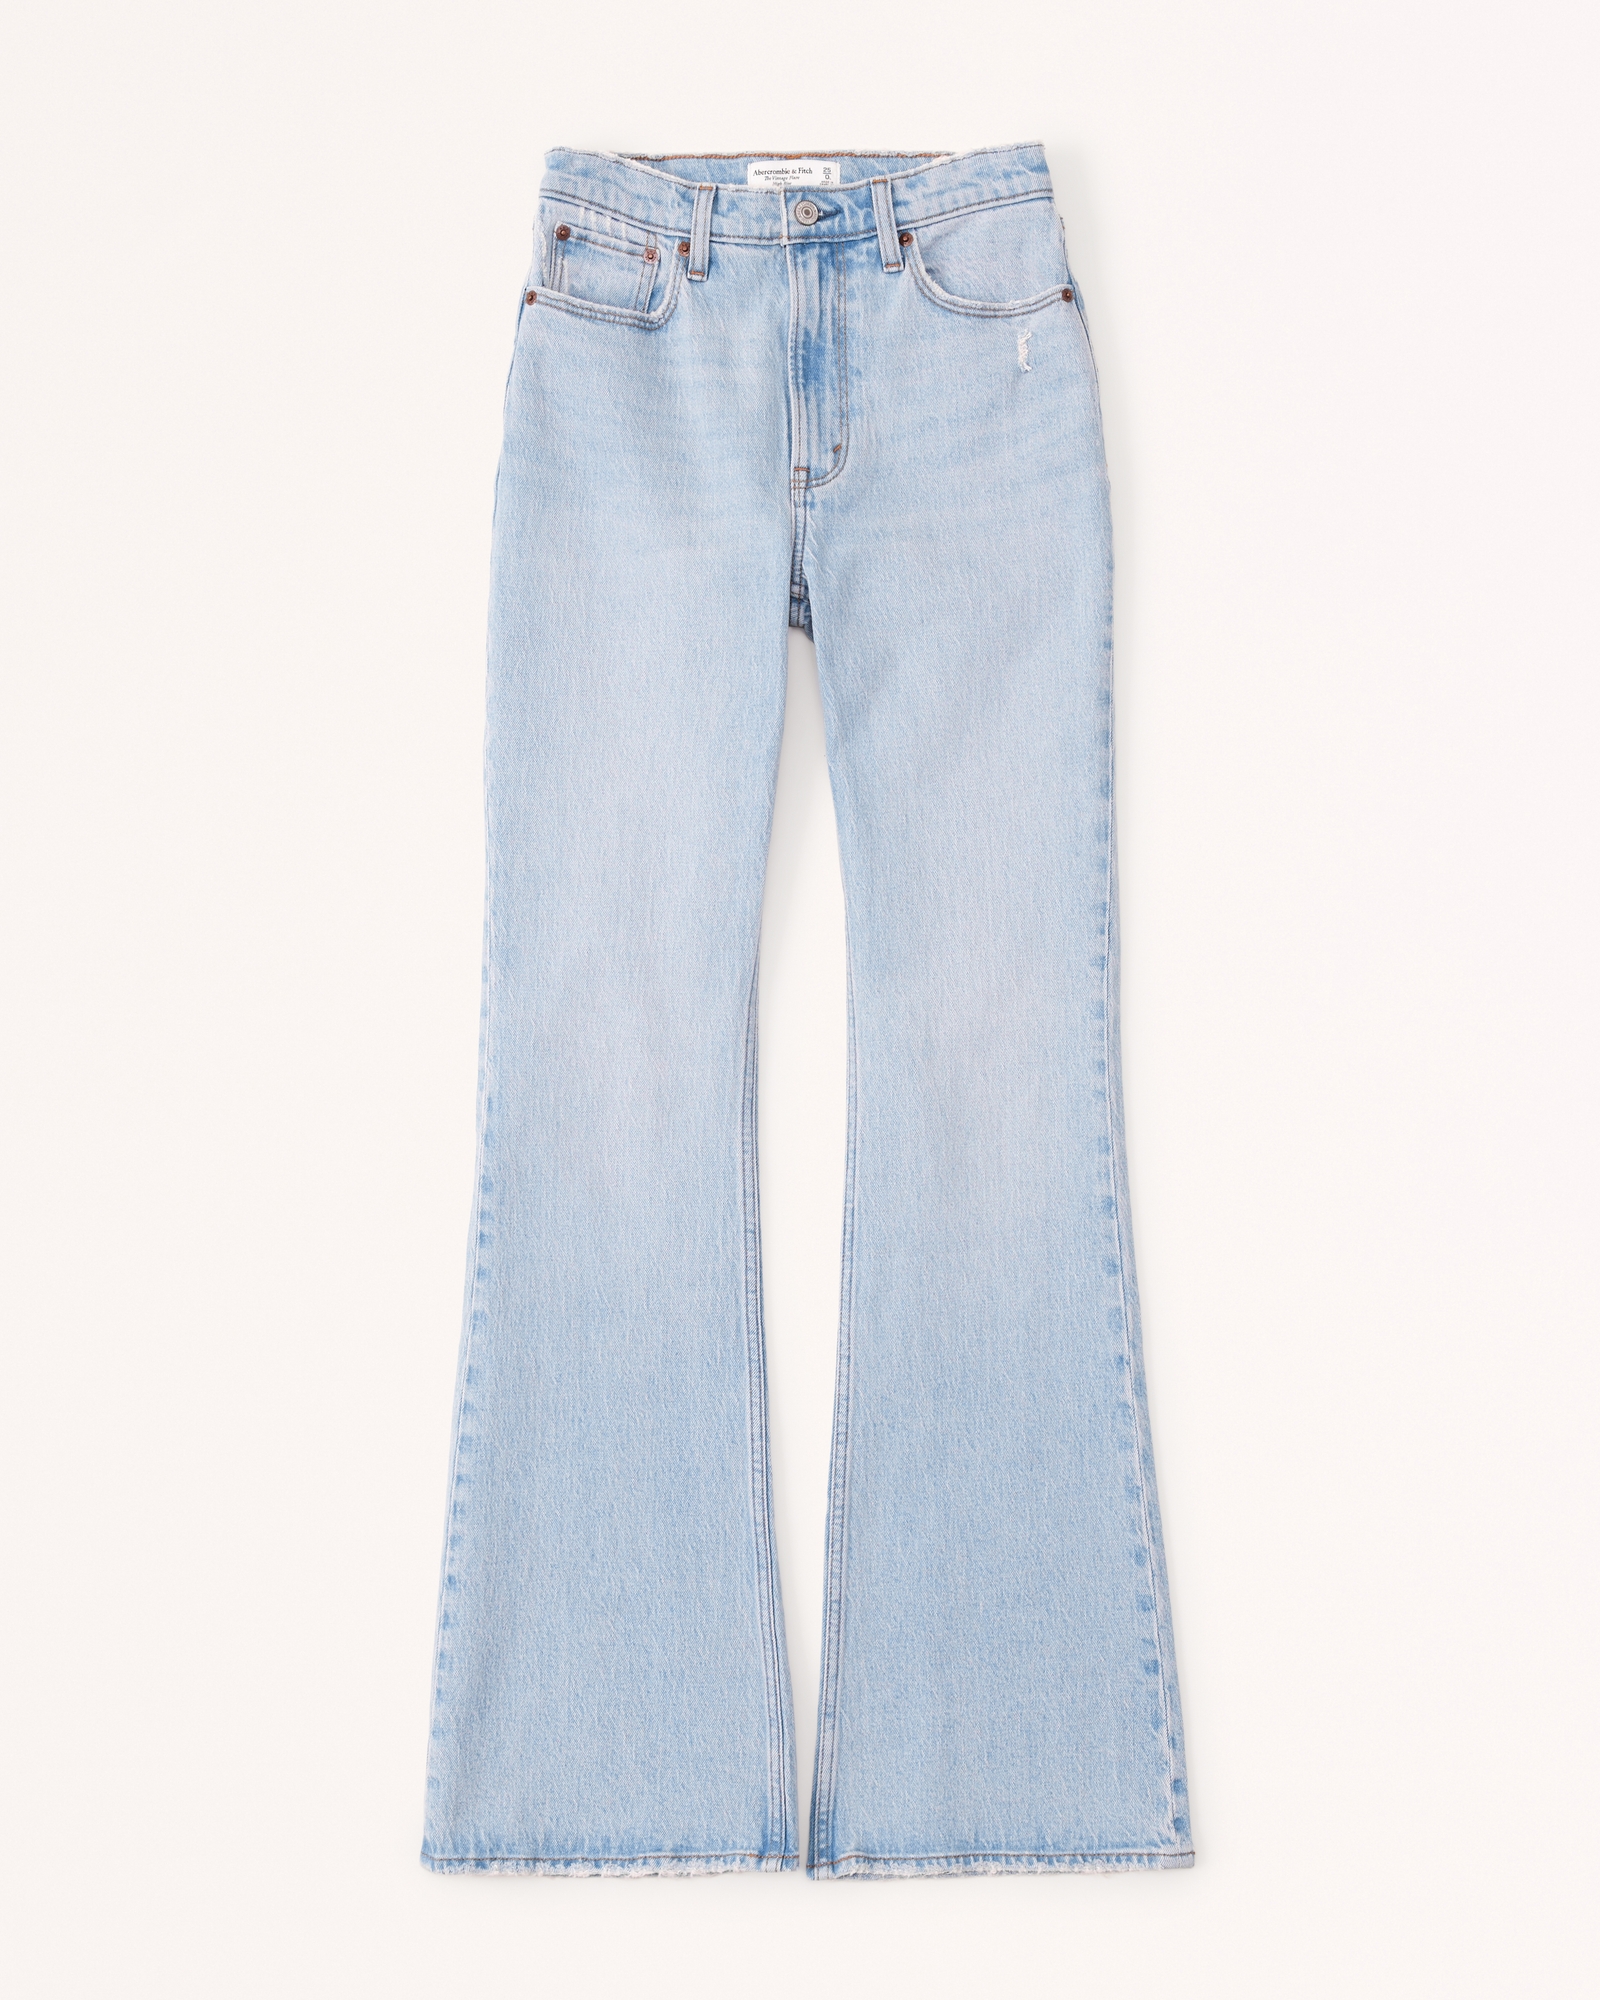 Retro Blue Washed Flare Jeans Skinny High Waist Pants Female